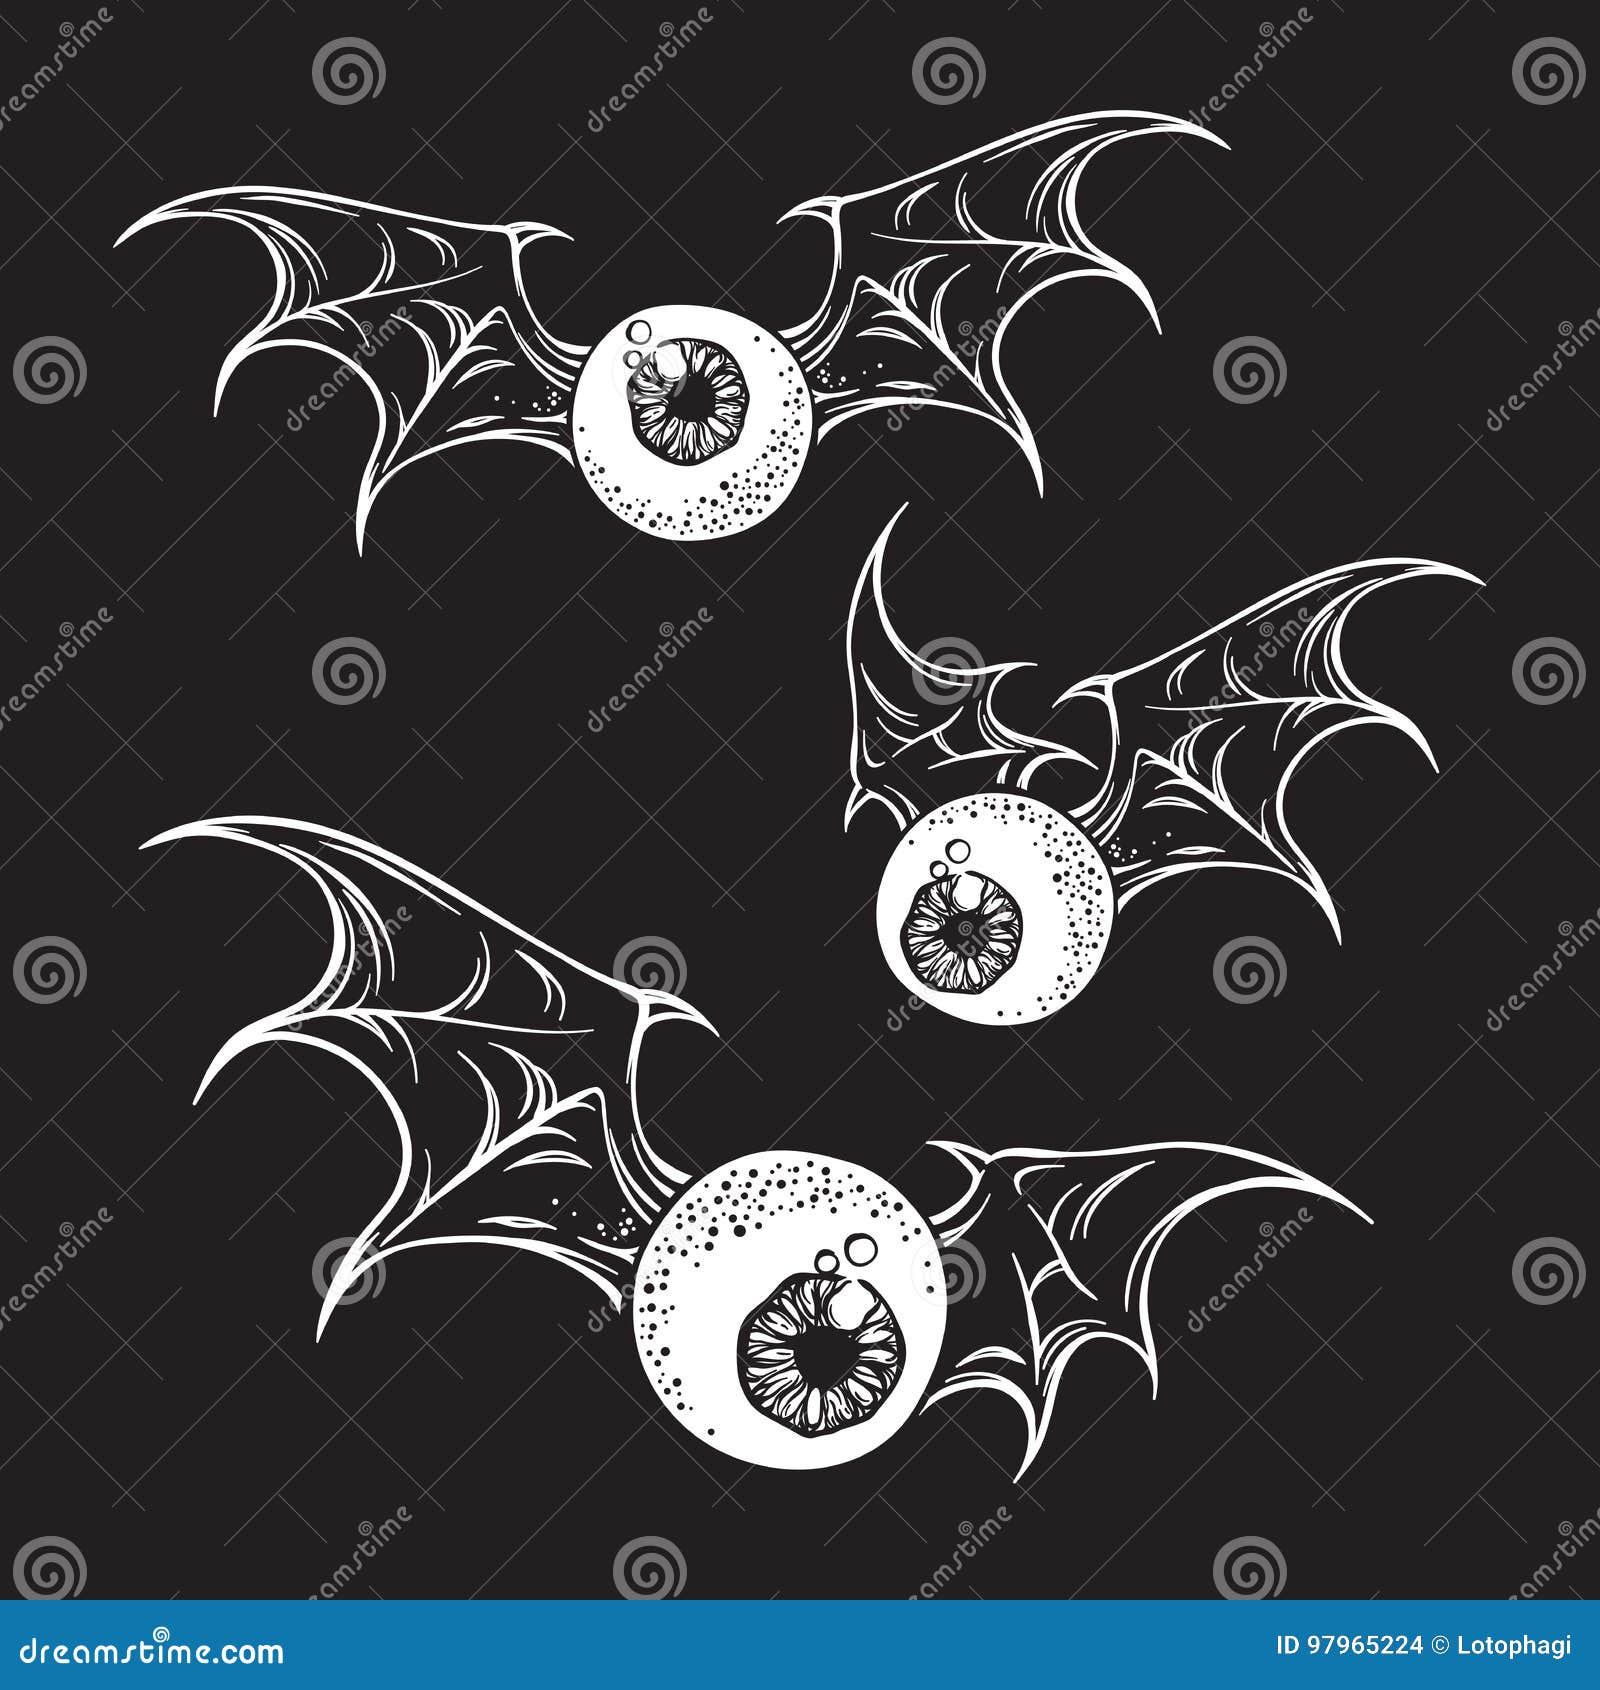 Eyeballs Clip Art, Hand Drawn Eyeball PNG, Halloween Graphics, Creepy  Halloween Clip Art, Vintage Illustrations, for Stickers, Tshirt Design 